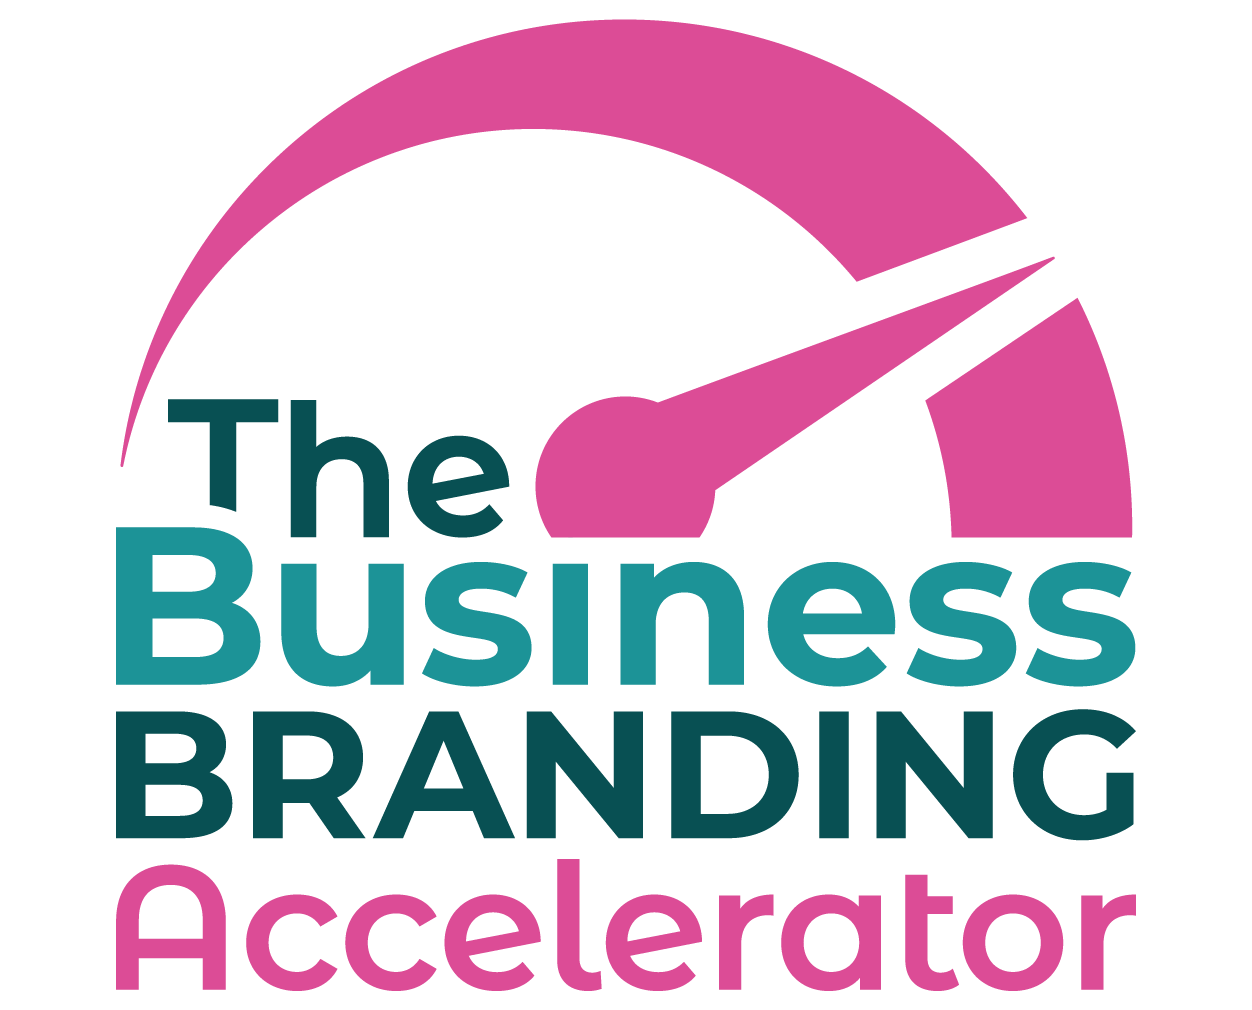 The Business Branding Accelerator logo